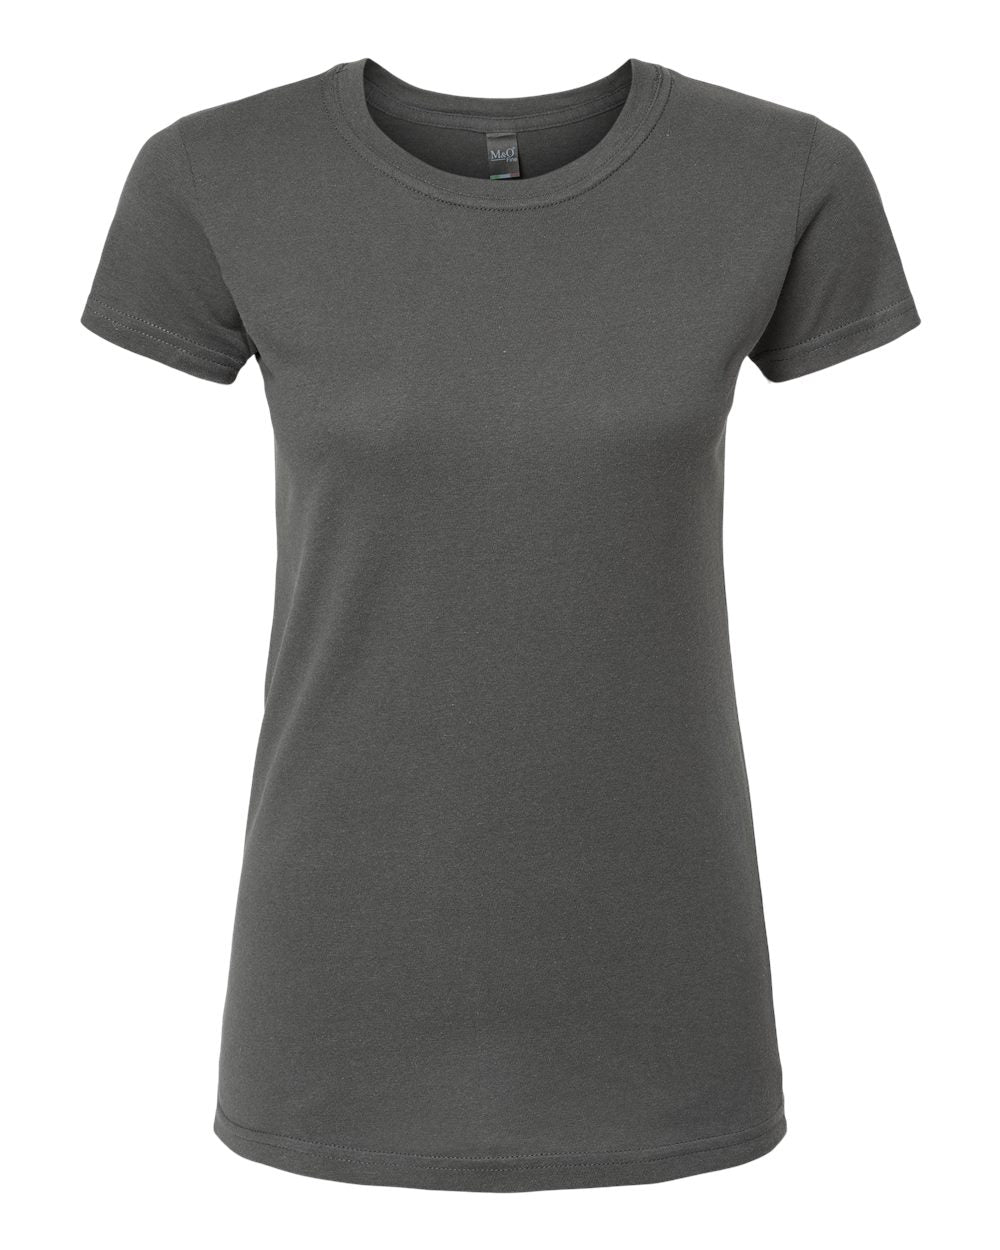 M&O Women's Fine Jersey T-Shirt 4513 #color_Fine Charcoal